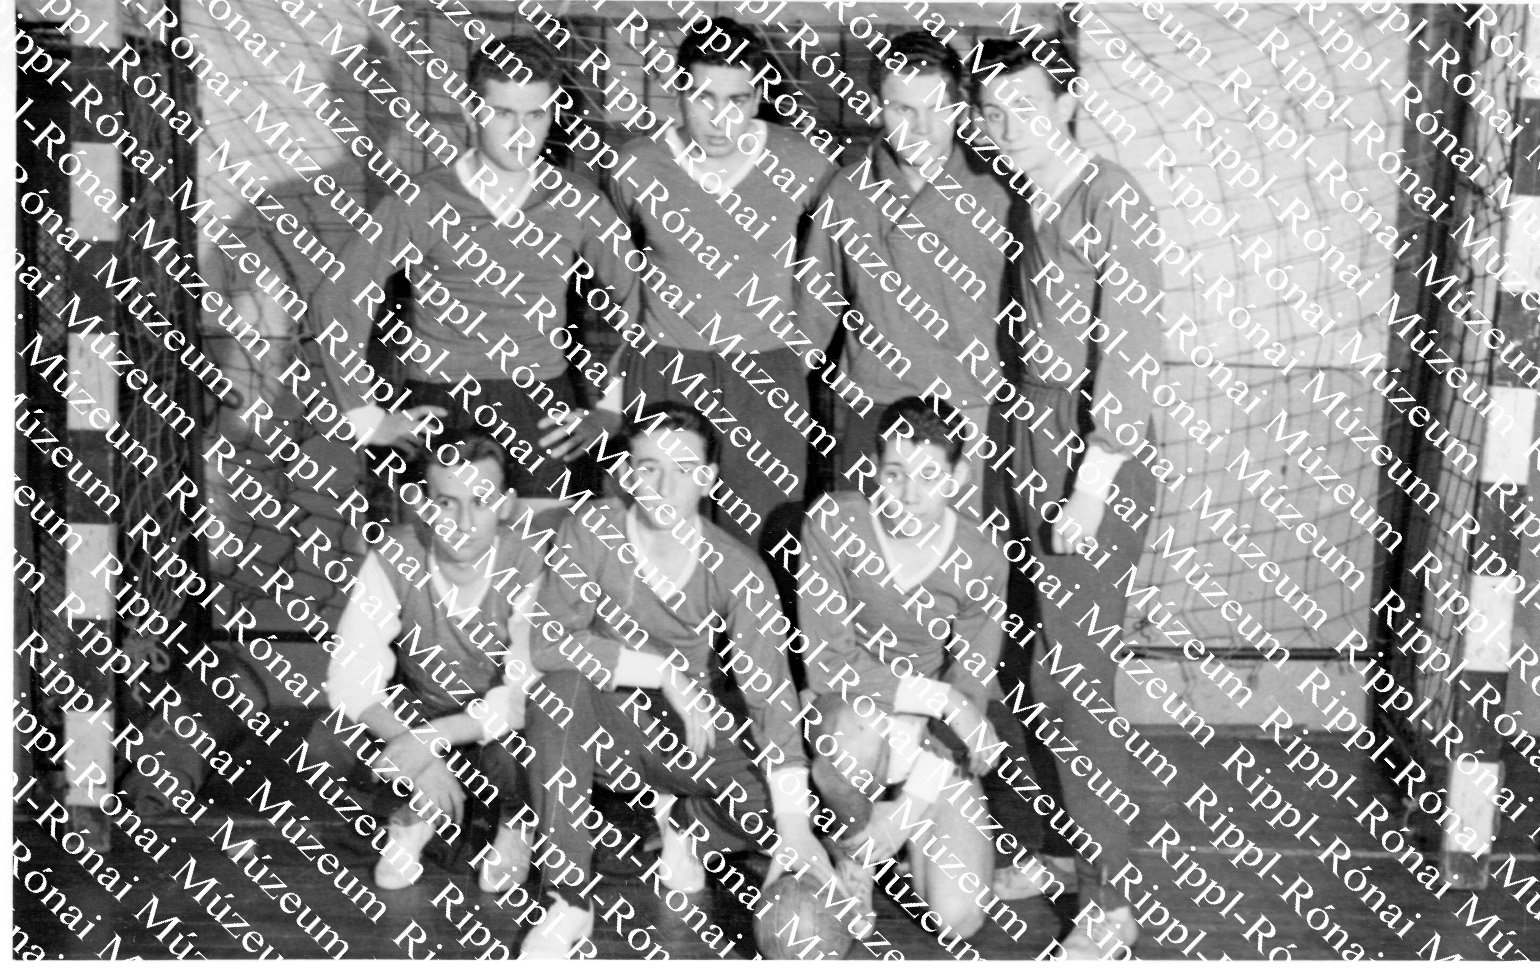 Kiskorpádi SK férfiröplabda-csapata (Rippl-Rónai Múzeum CC BY-NC-SA)